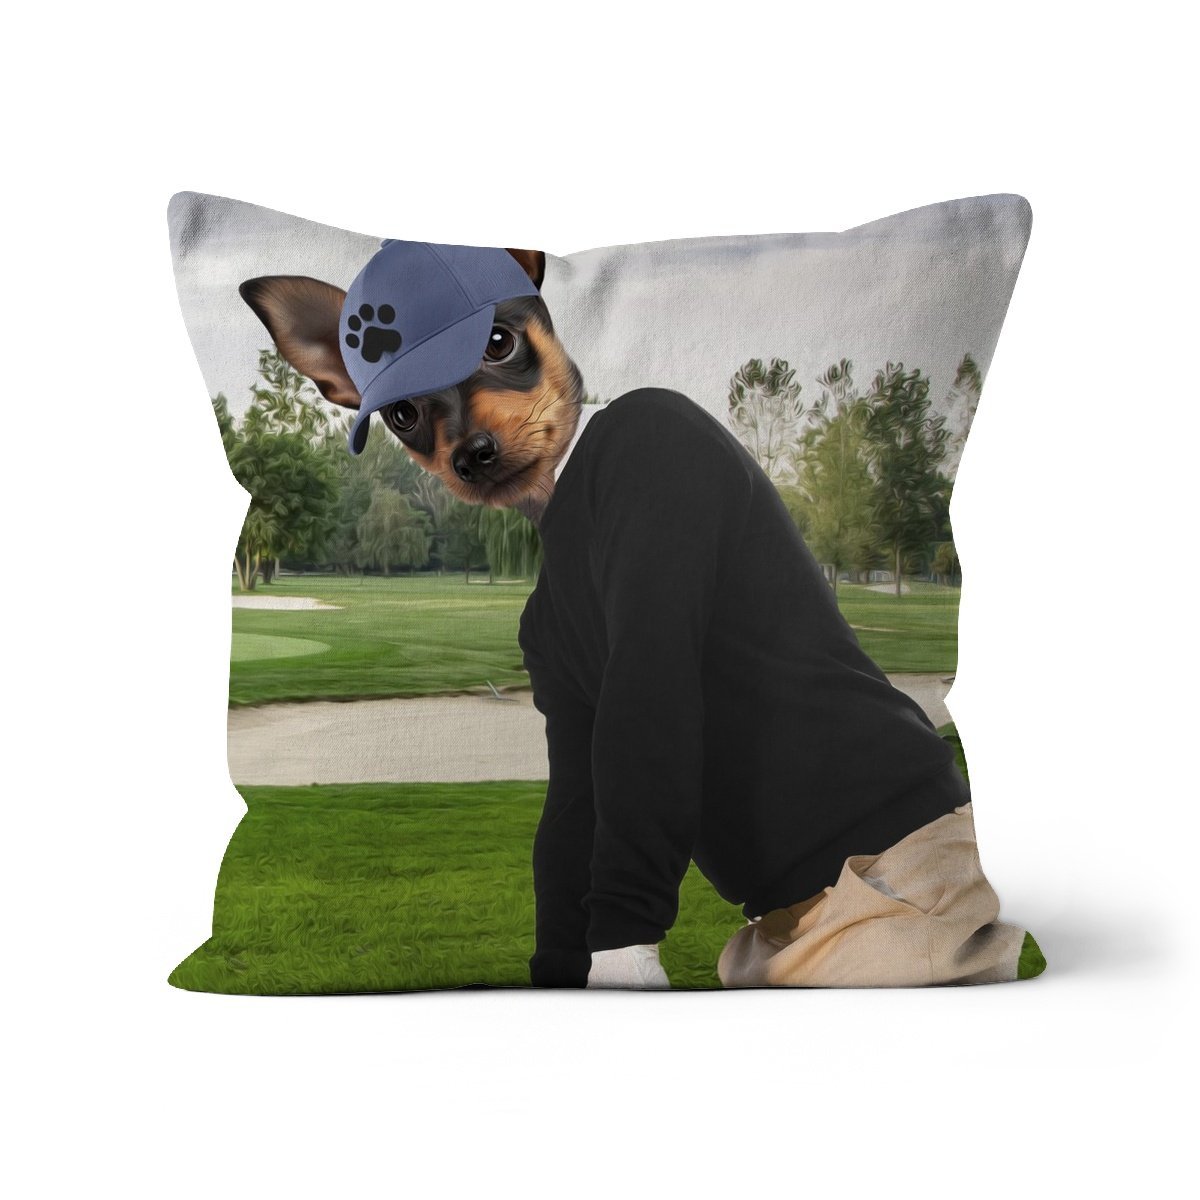 The Golfer: Custom Pet Cushion - Paw & Glory - #pet portraits# - #dog portraits# - #pet portraits uk#paw & glory, custom pet portrait pillow,pup pillows, pillows of your dog, pillow personalized, print pet on pillow, pet face pillow